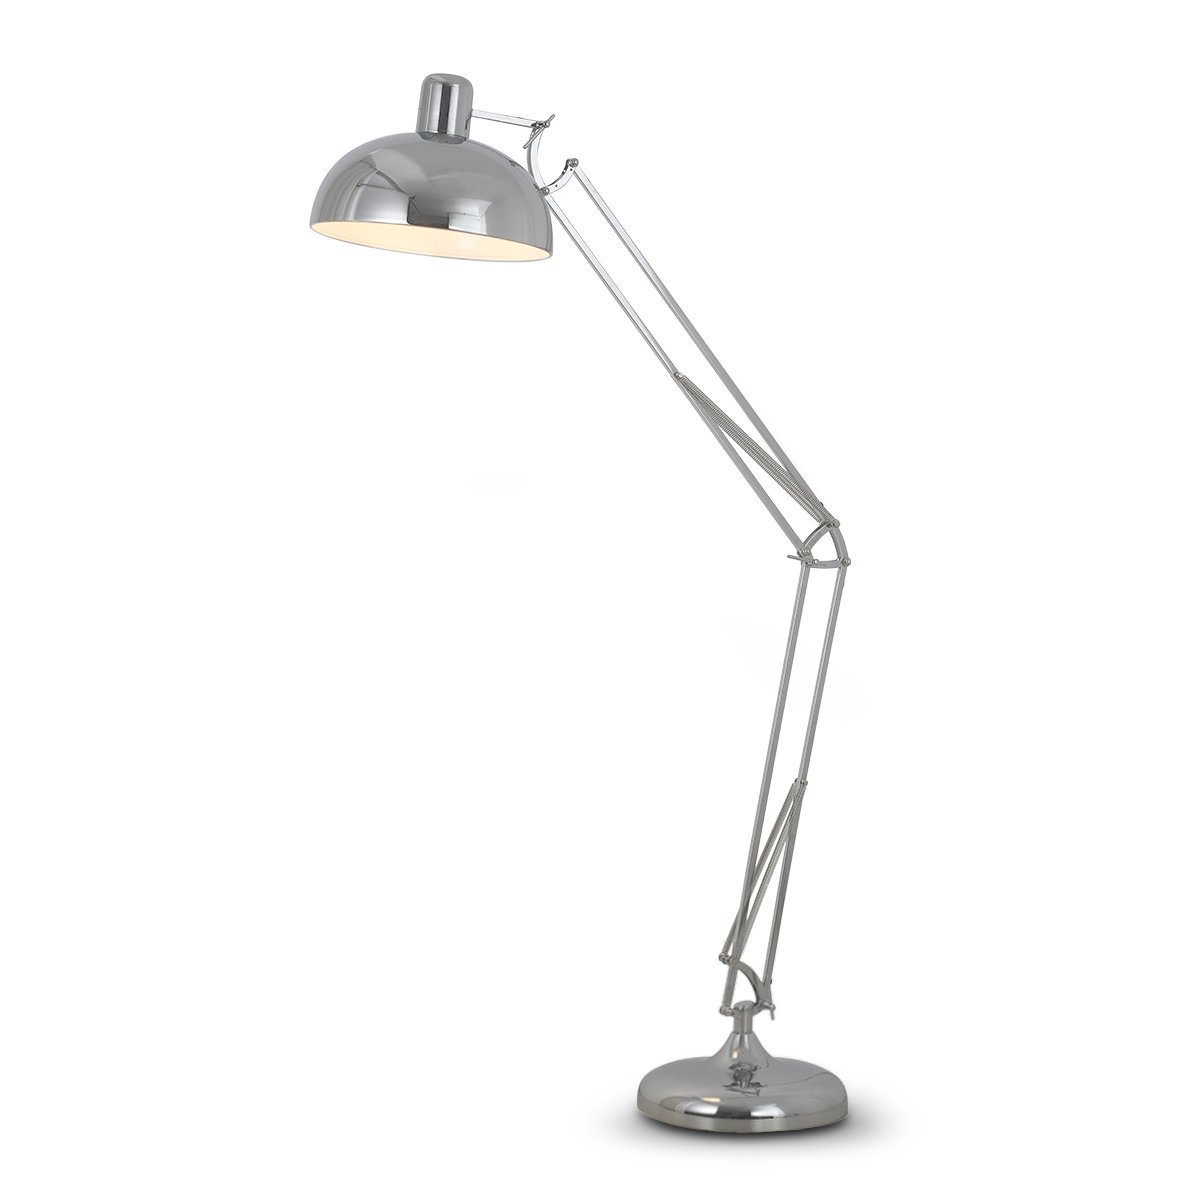 Sarantino Metal Architect Floor Lamp Shade Adjustable Height - Chrome 1